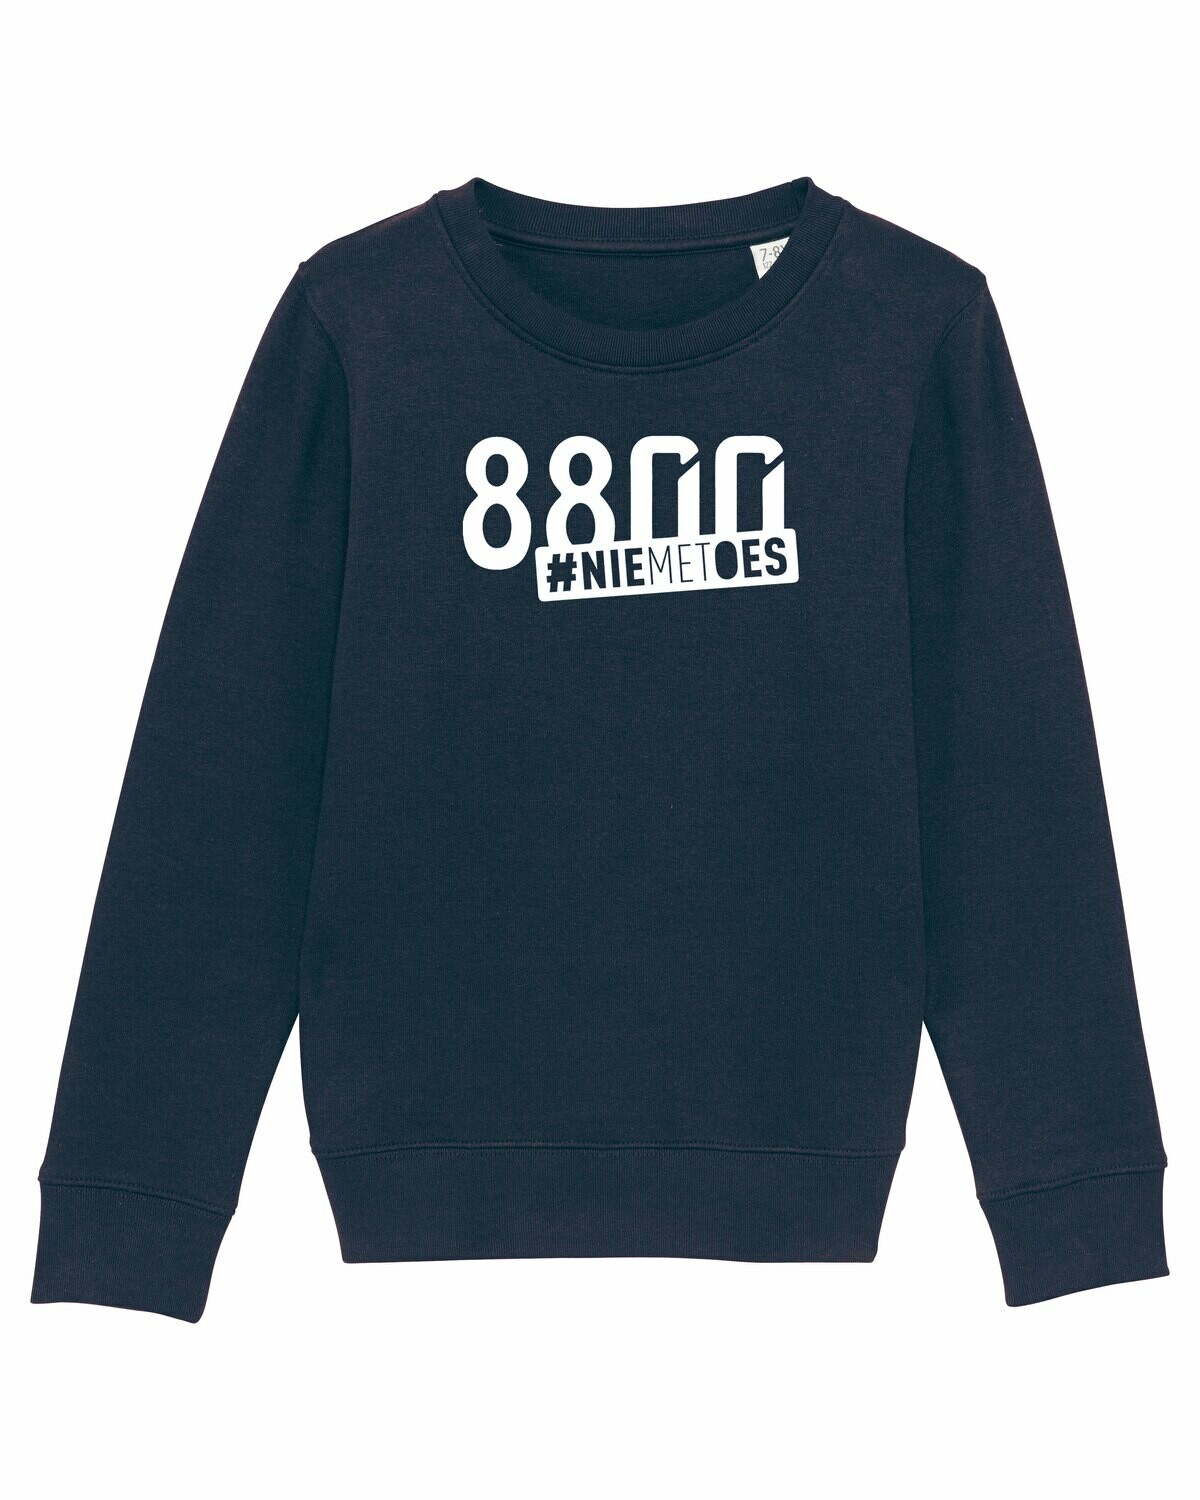 Kids Sweater 8800 #Nie me oes!